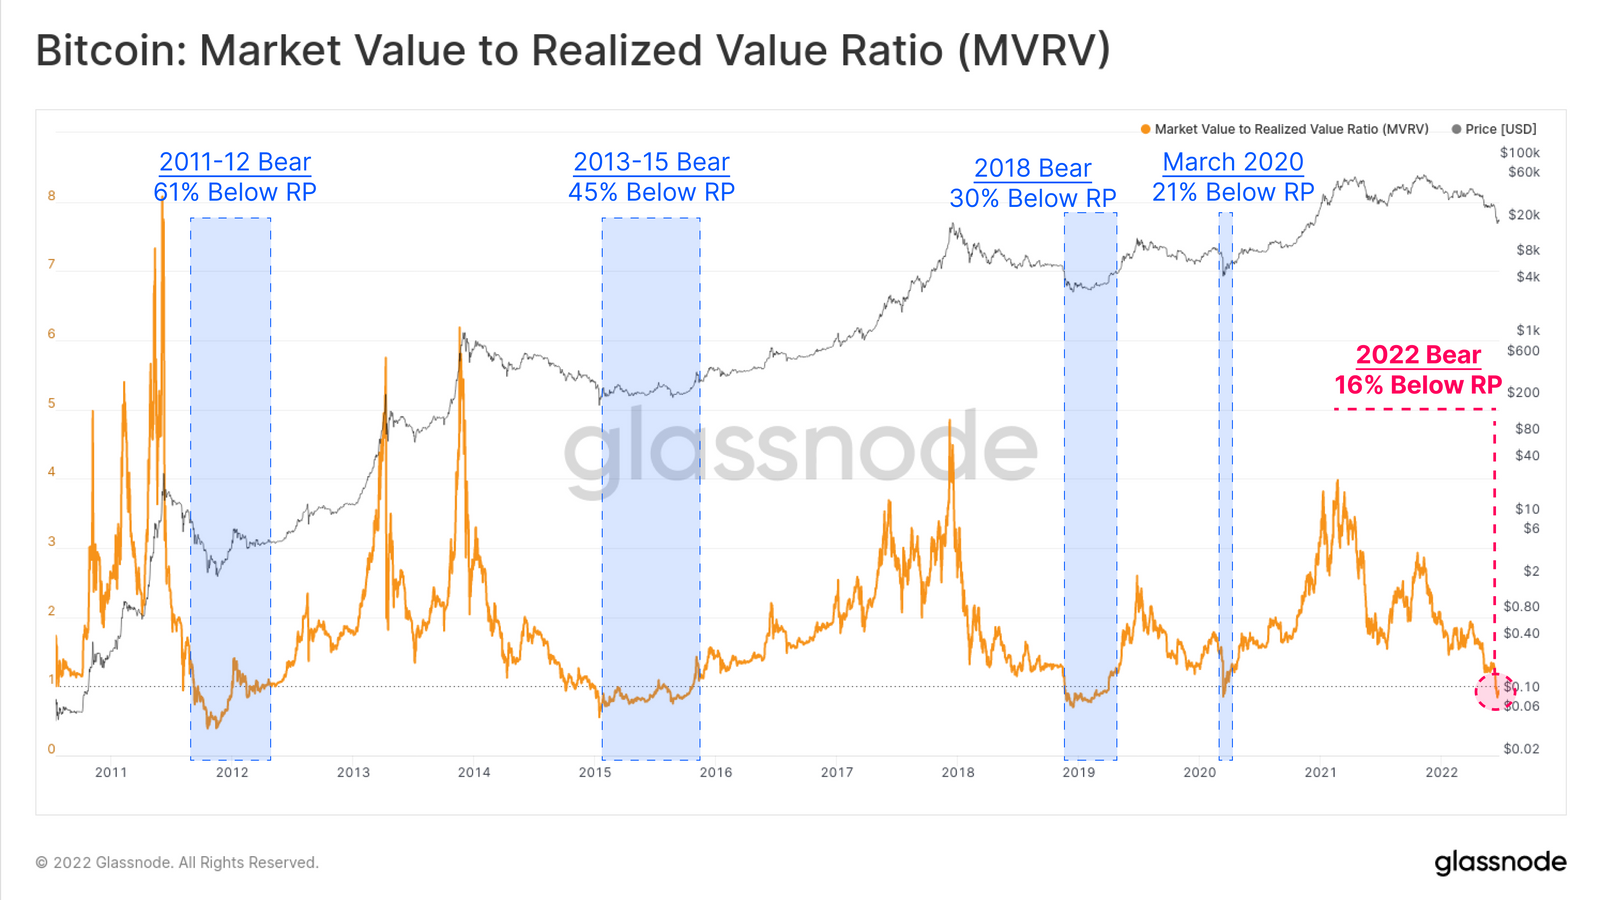 Bear market 2022 hits crypto to its worst in historic records 1